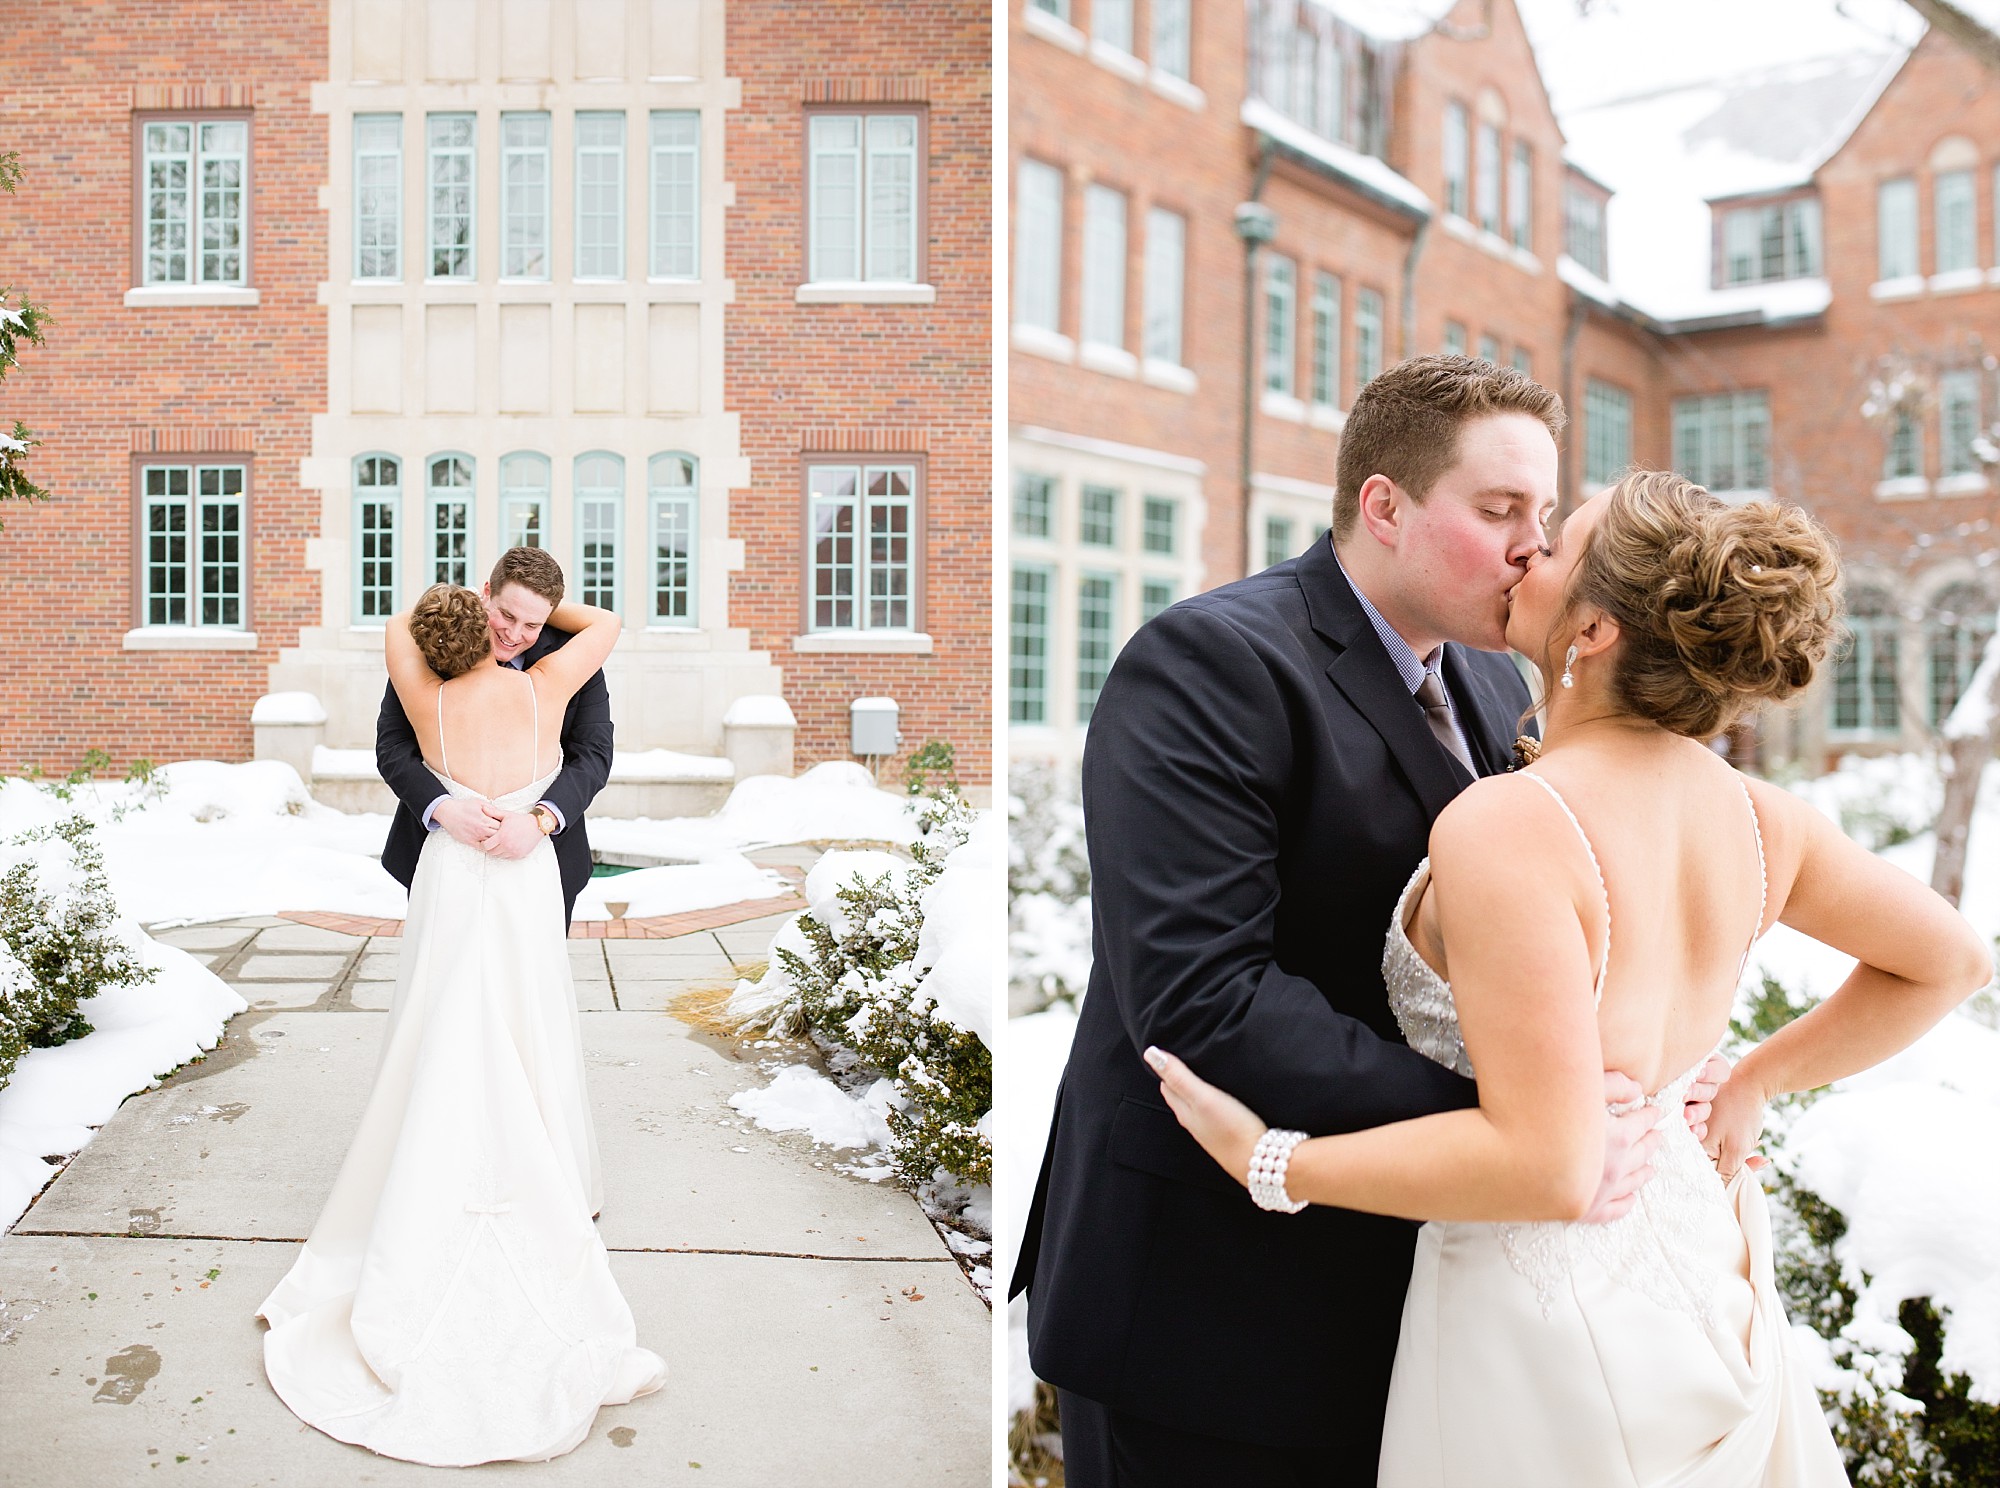 A classic December winter wedding at Michigan State University in East Lansing, Michigan.